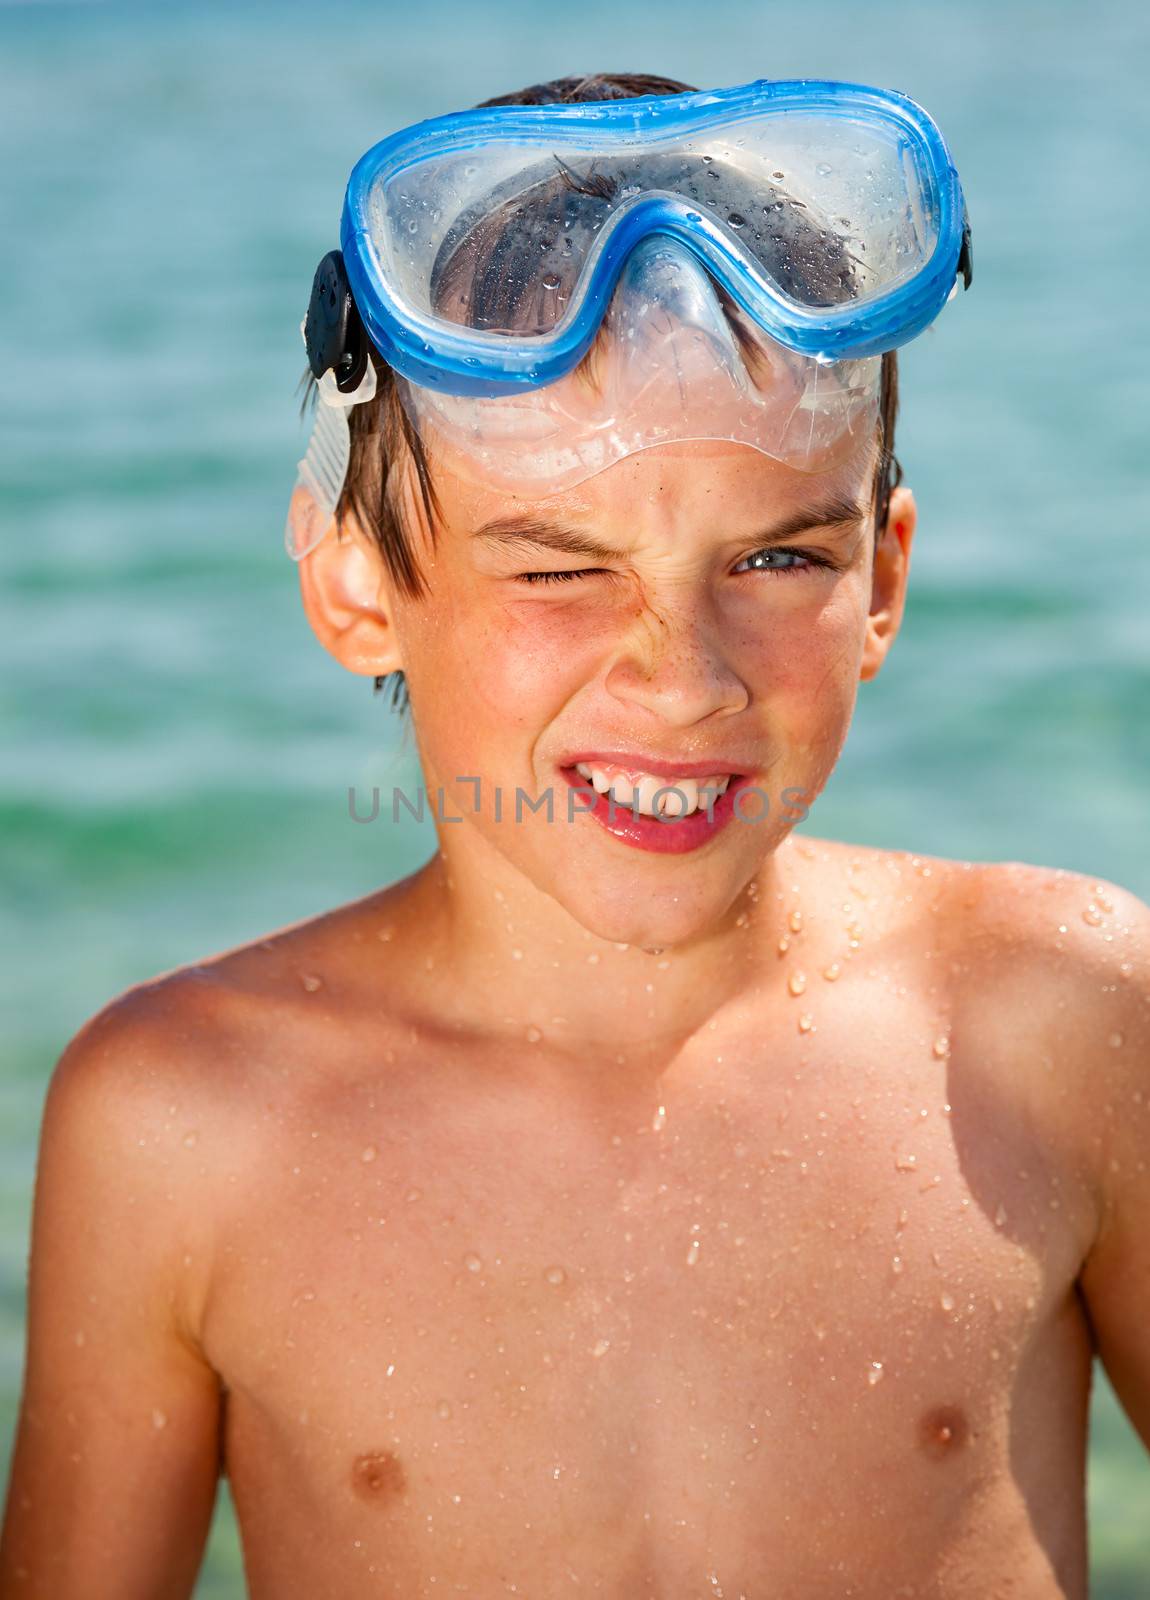 Boy with scuba mask by naumoid